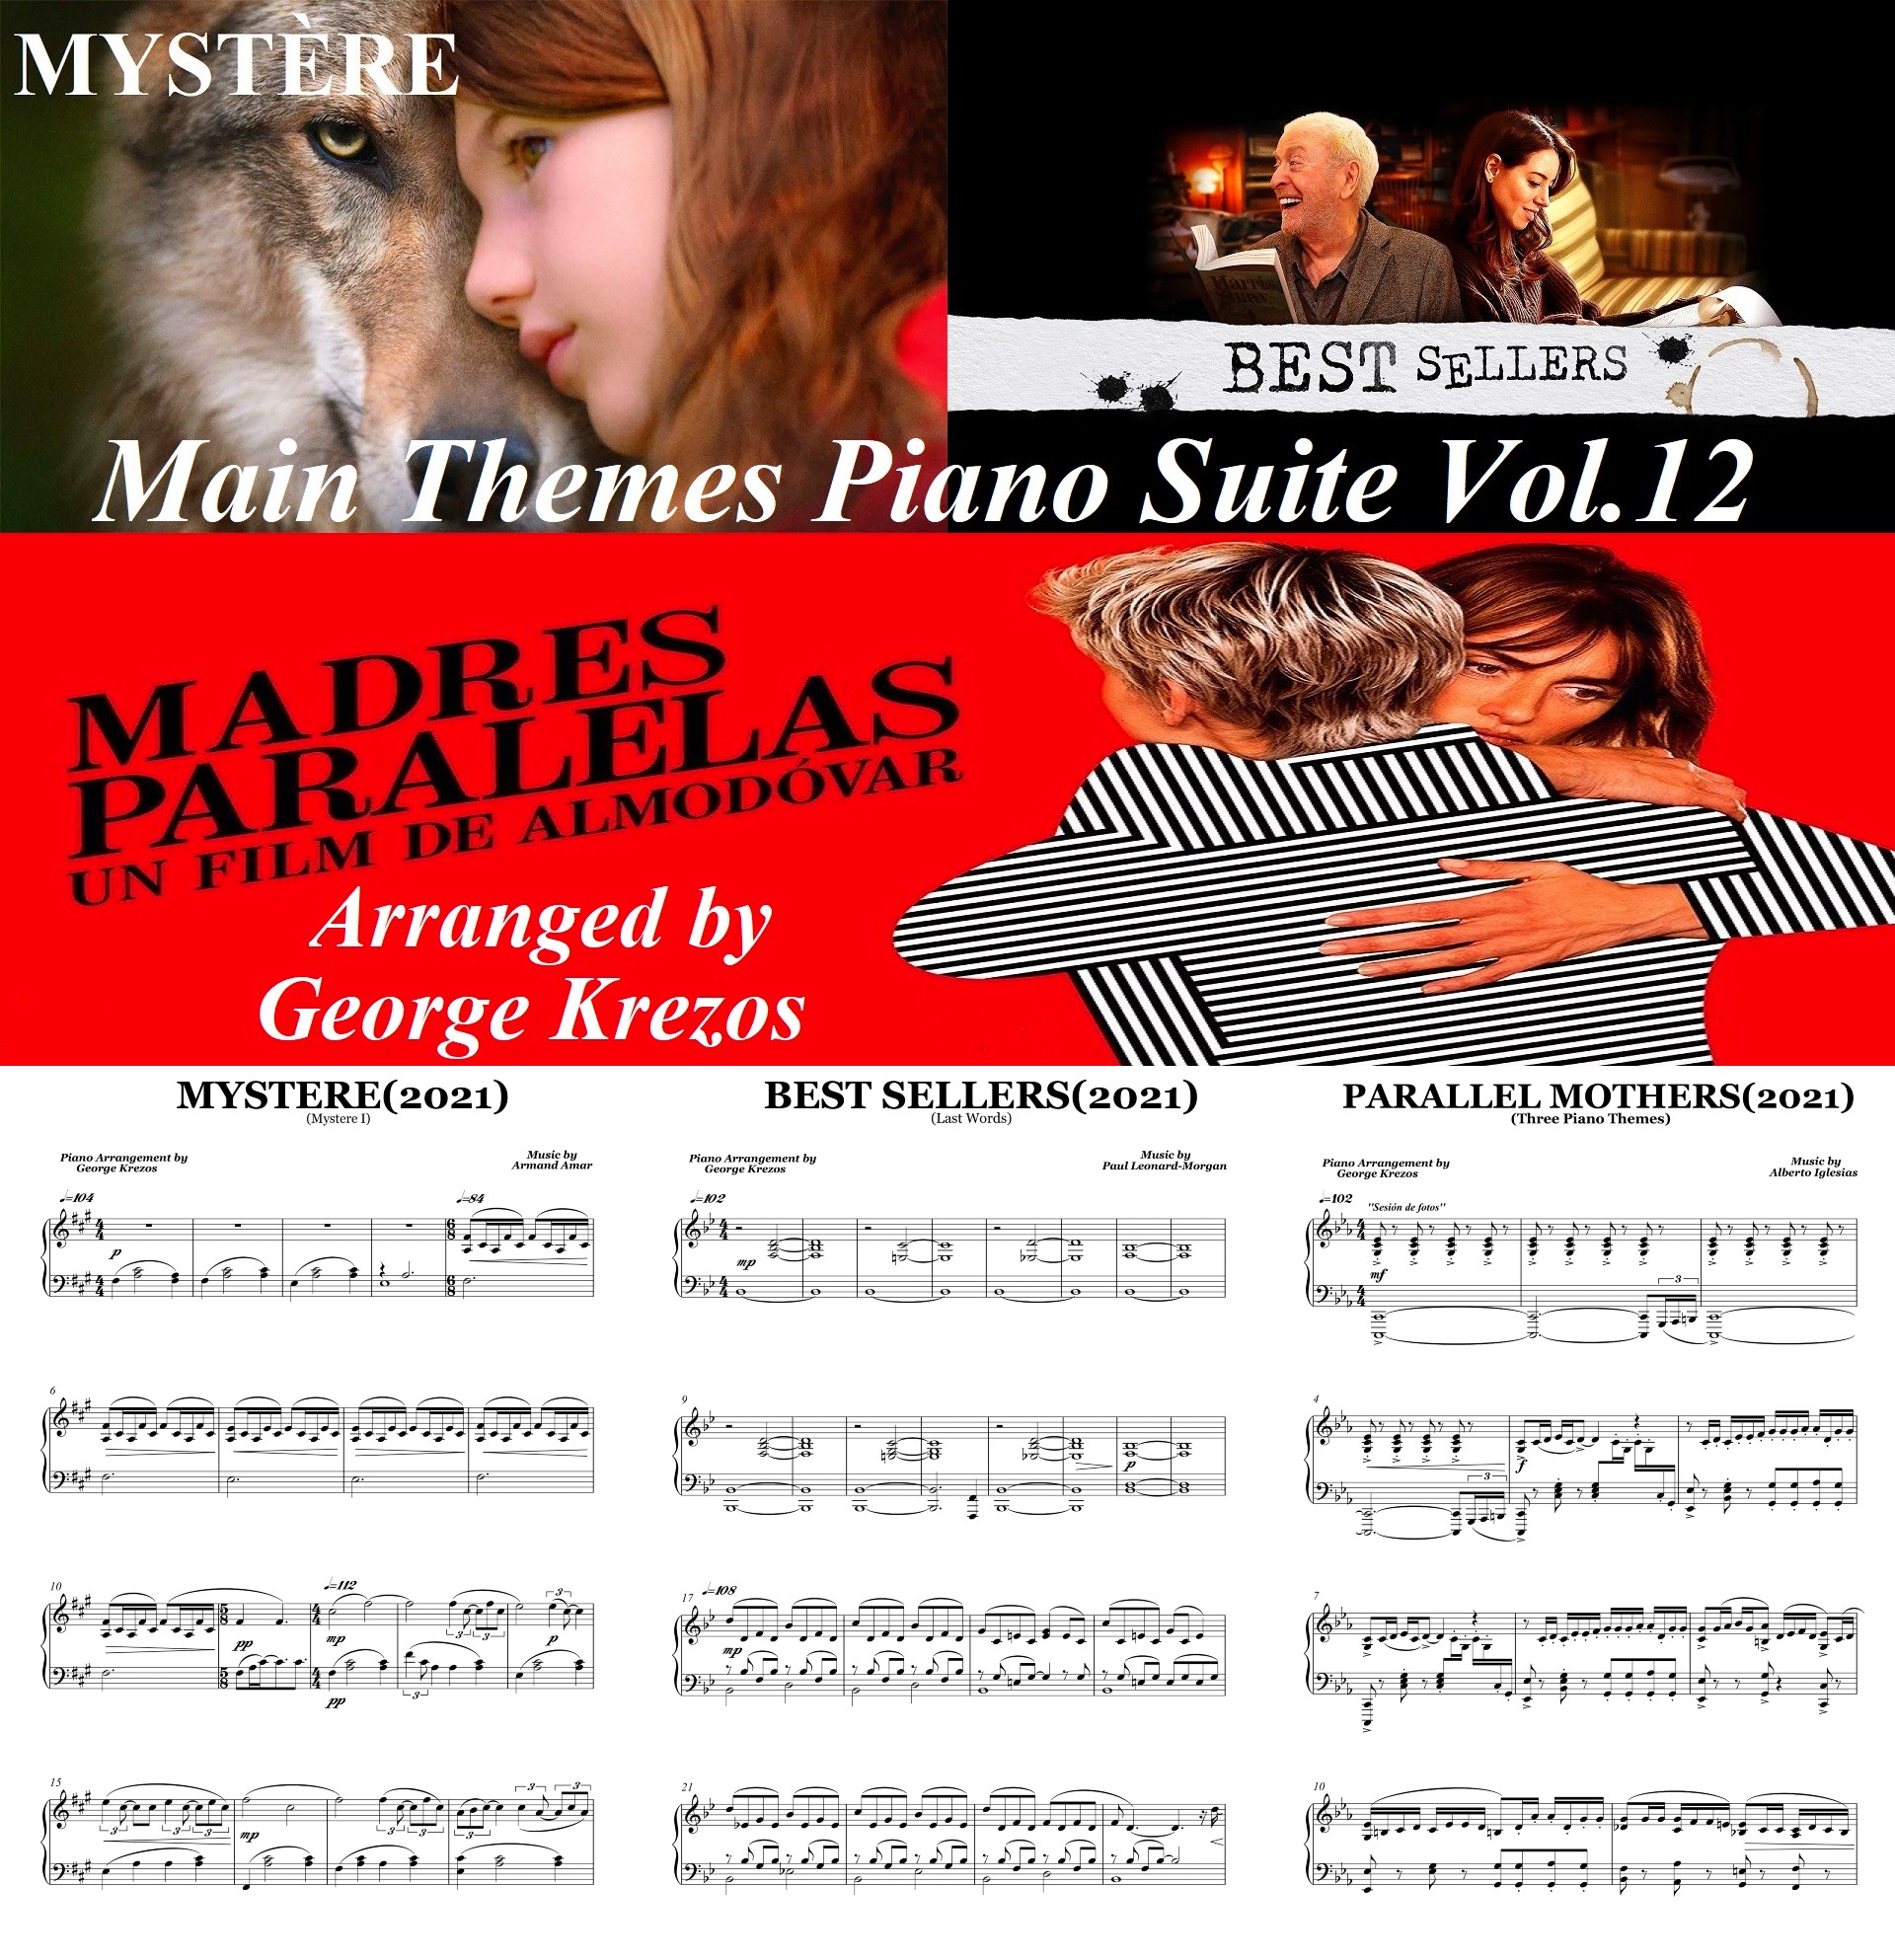 Main Themes Piano Suite Vol. 12.jpg